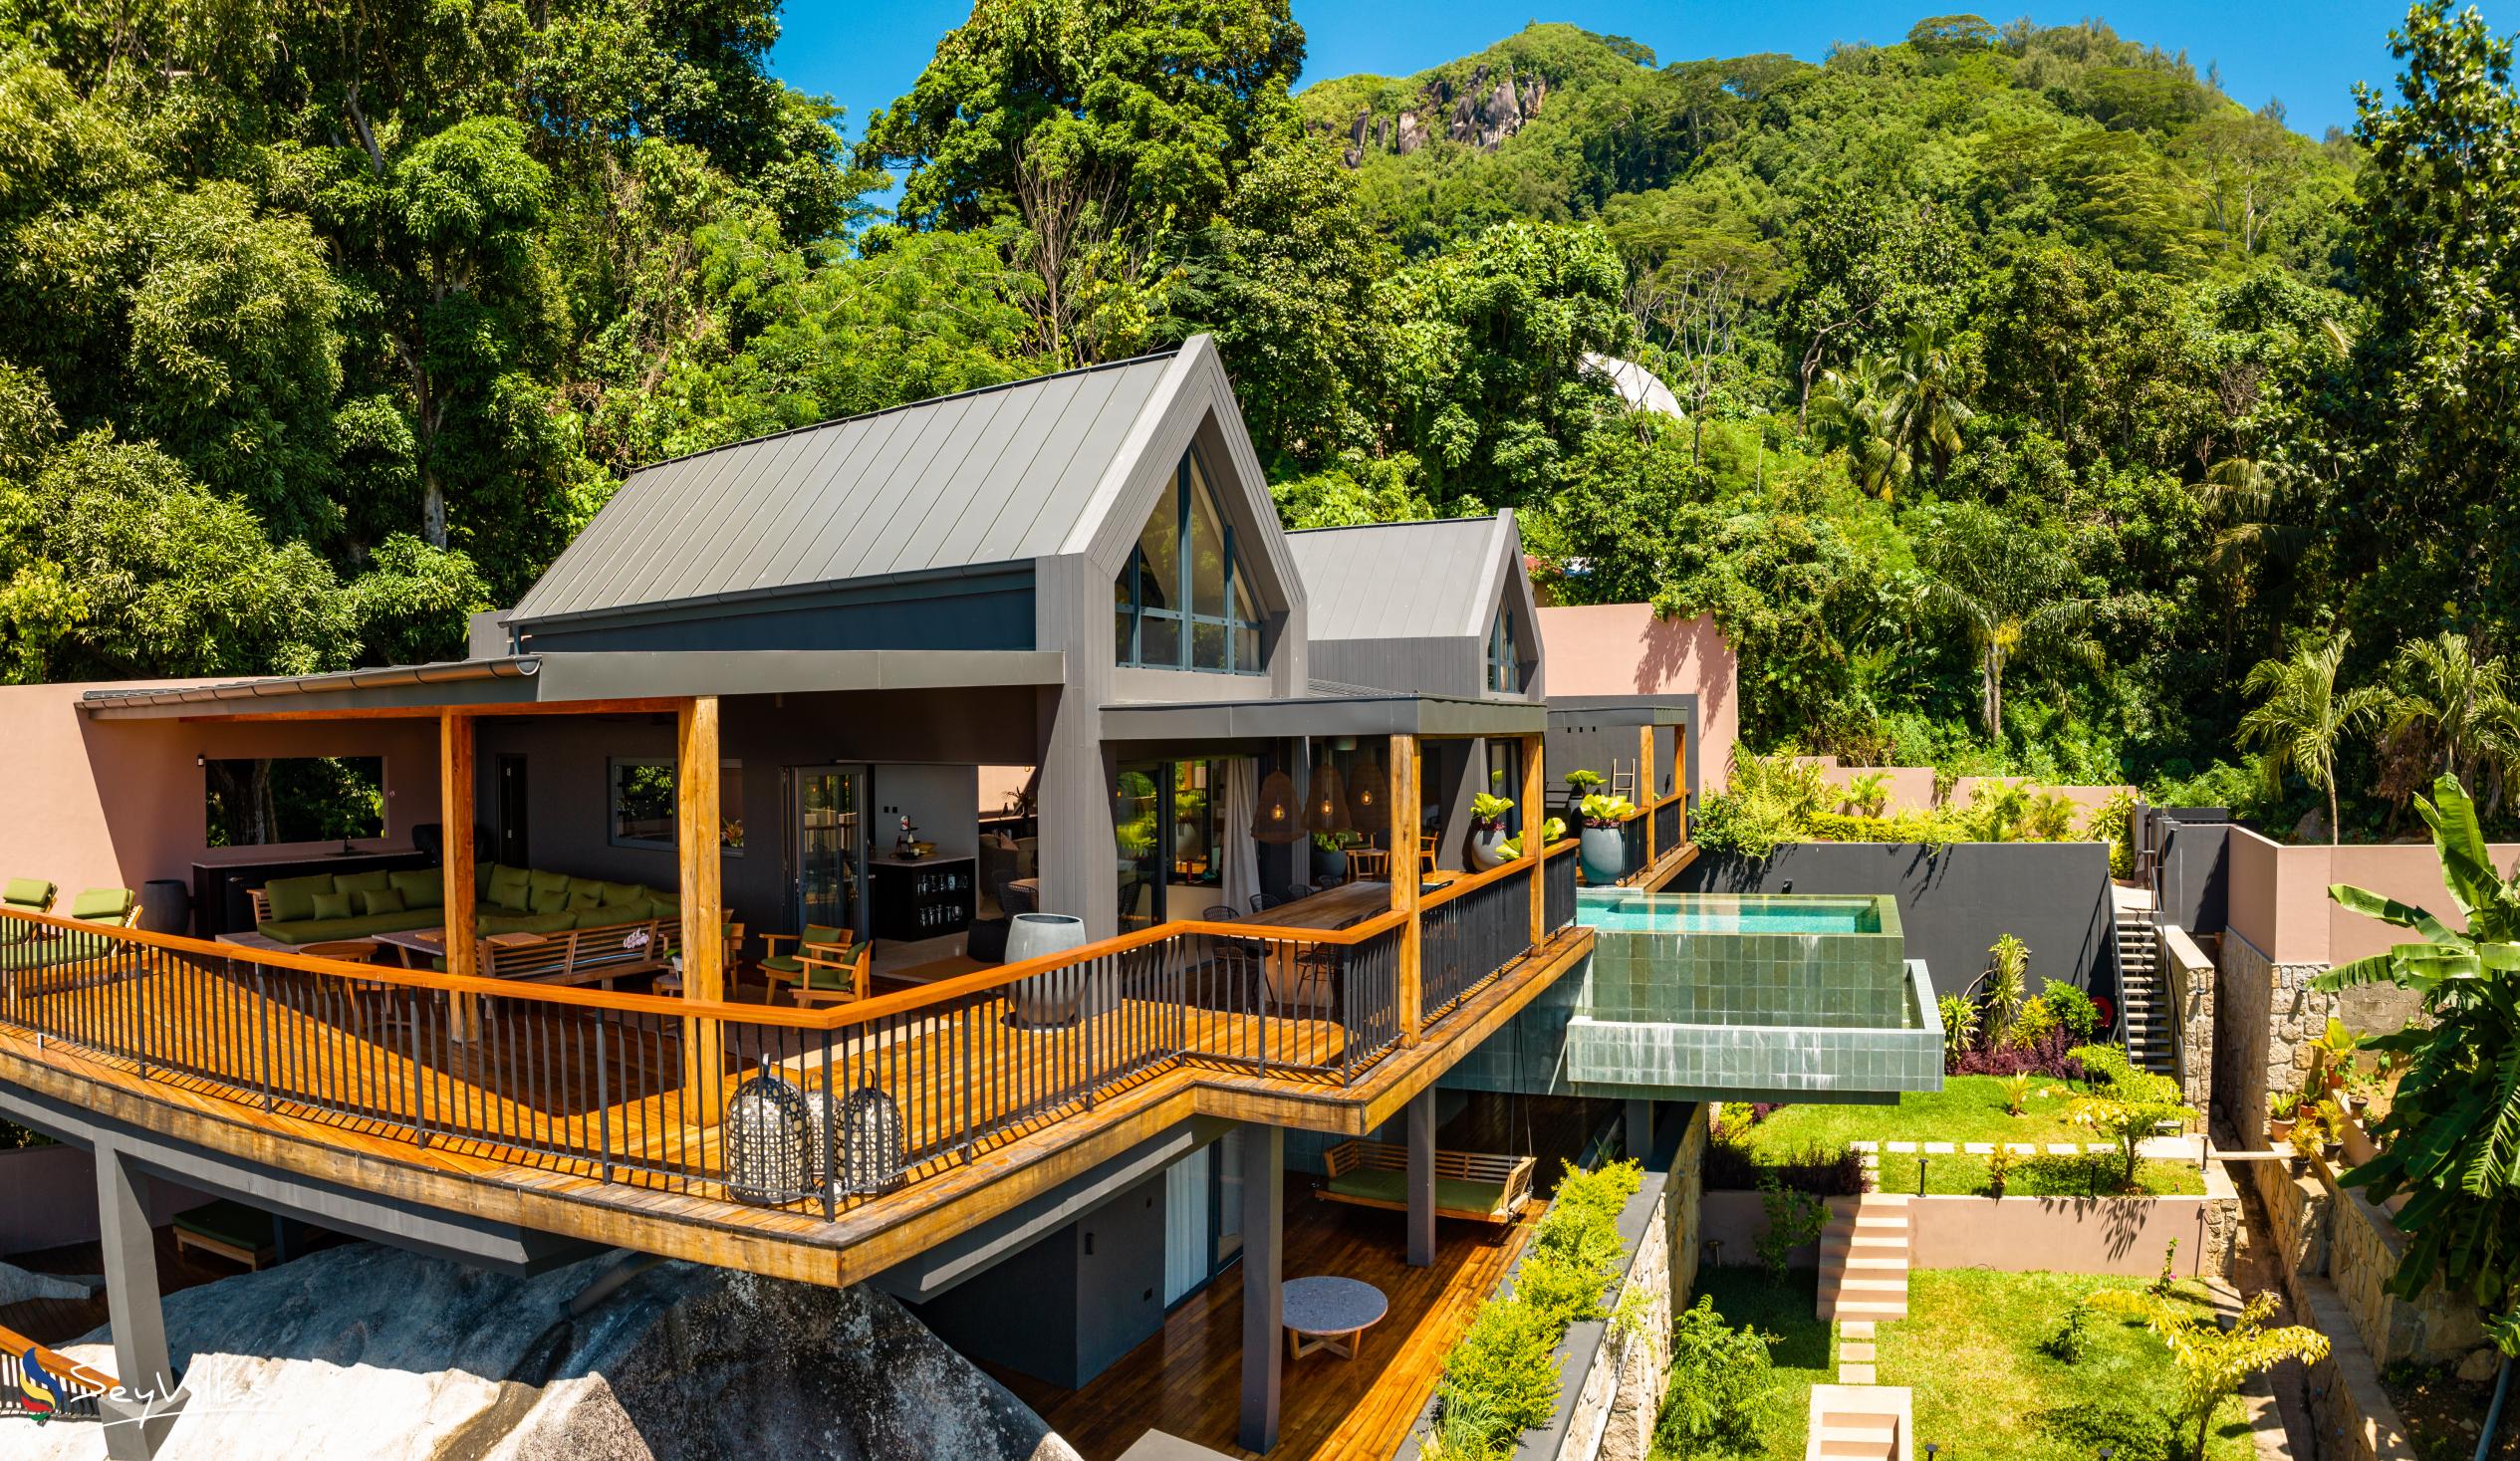 Photo 7: Maison Gaia - Outdoor area - Mahé (Seychelles)